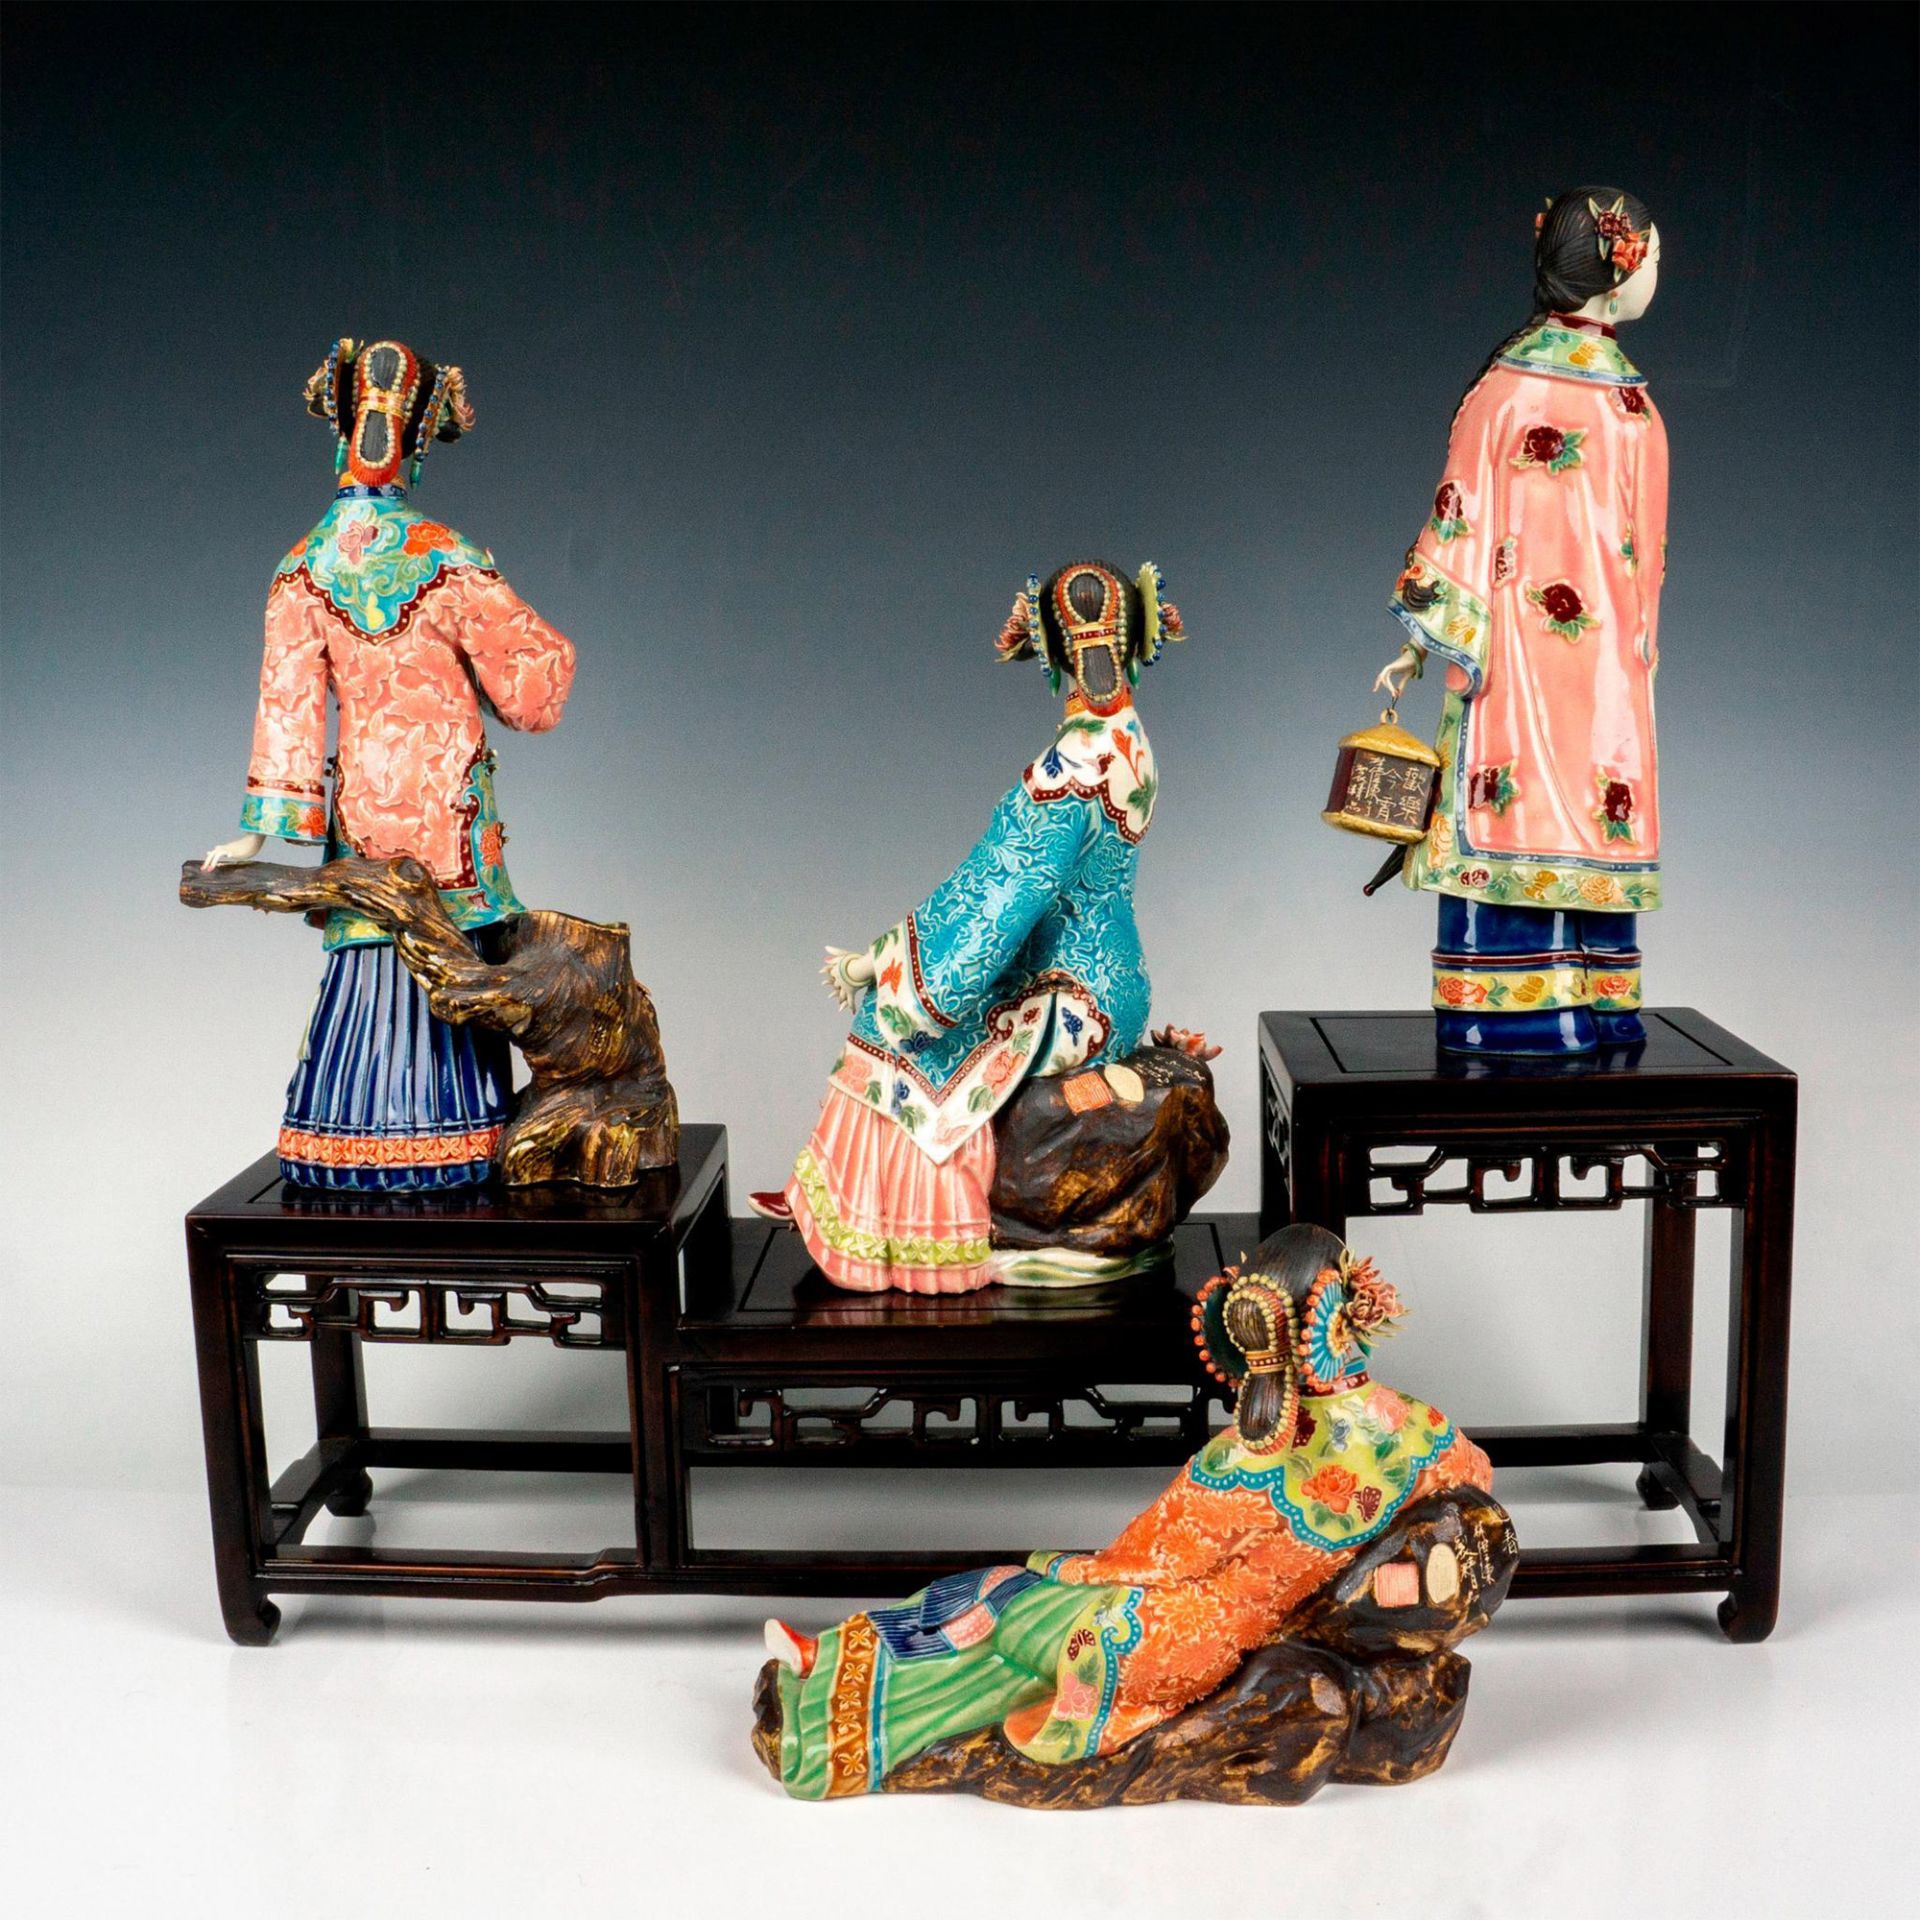 5pc Chinese Ceramic Glazed Maiden Figurines w/Display Base - Image 2 of 5